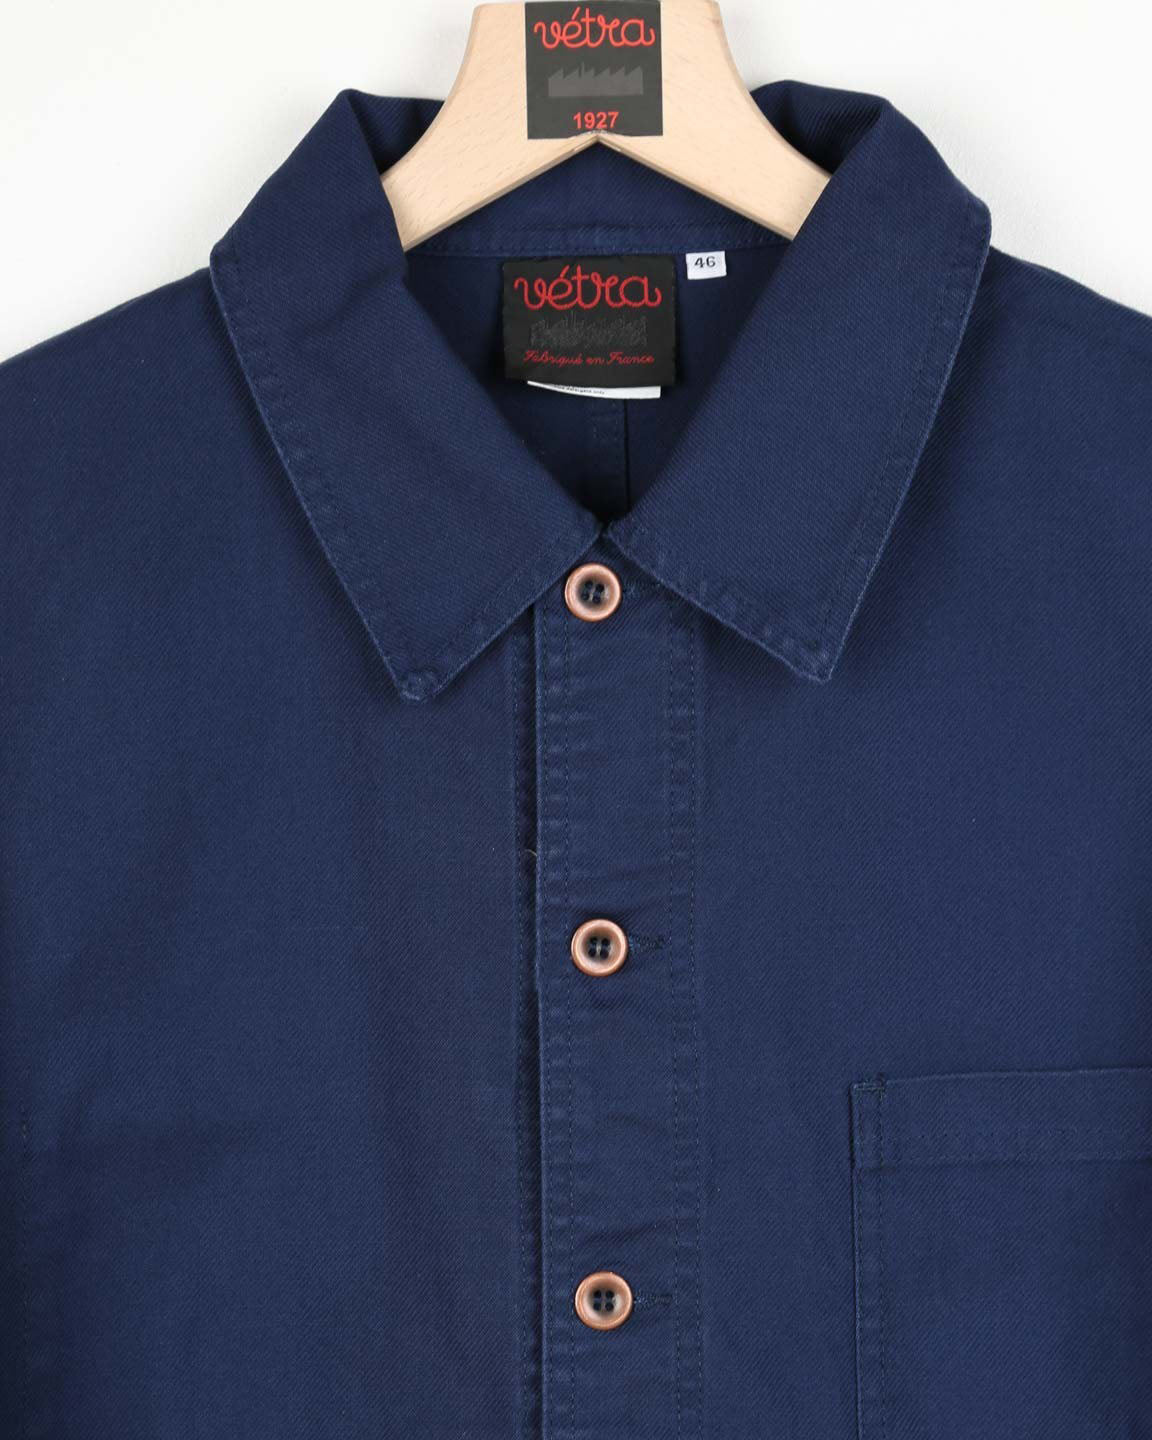 Workwear Jacket 5C in Twill Fabric - Navy